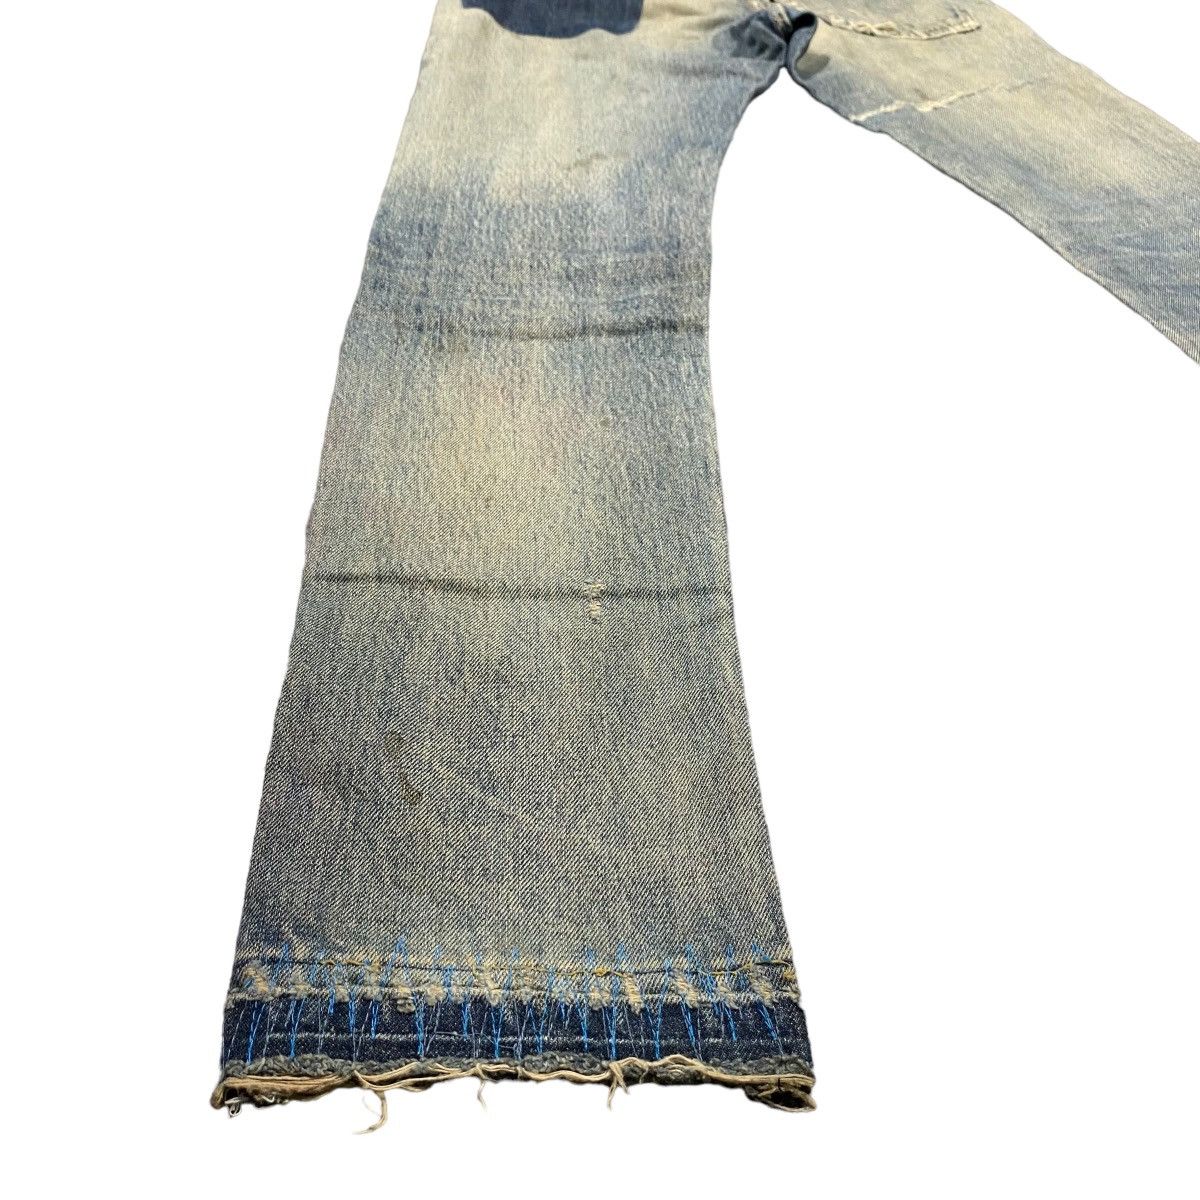 ❗️❗️❗️Rare Item Undercover 68 Blue Yarn Jeans - 16